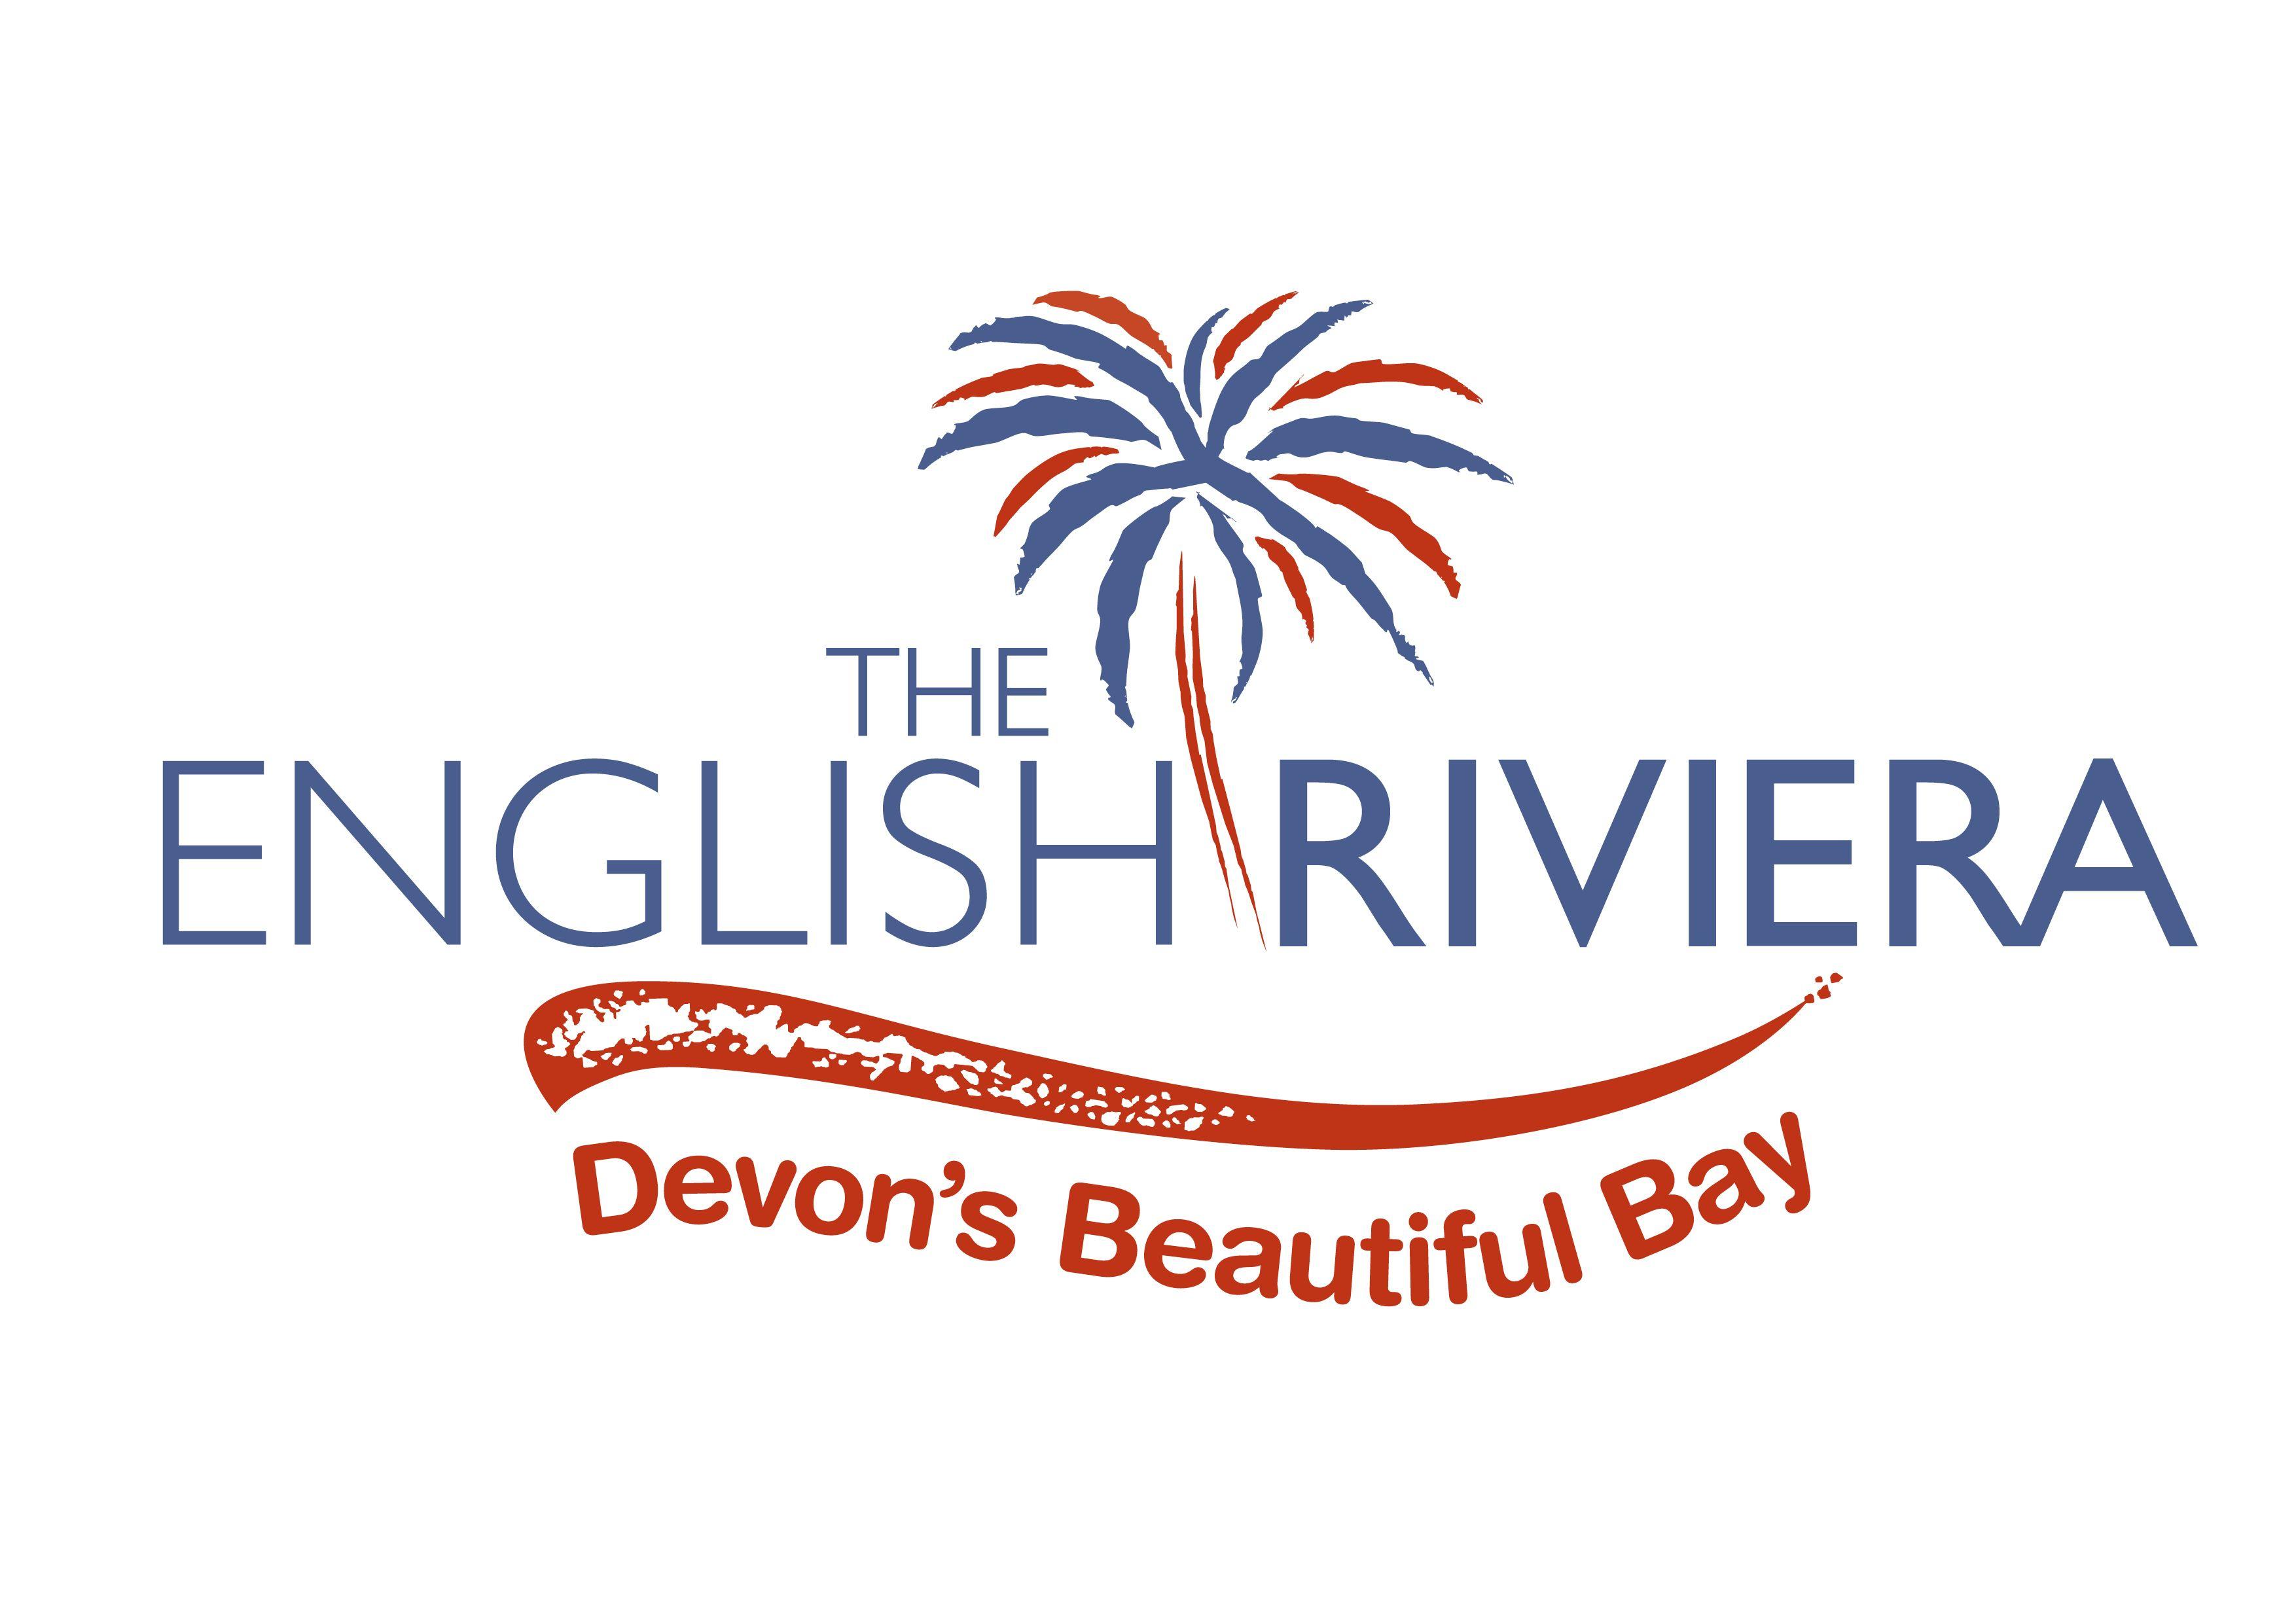 Google 2018 Logo - English Riviera Brand and Logos | English Riviera BID